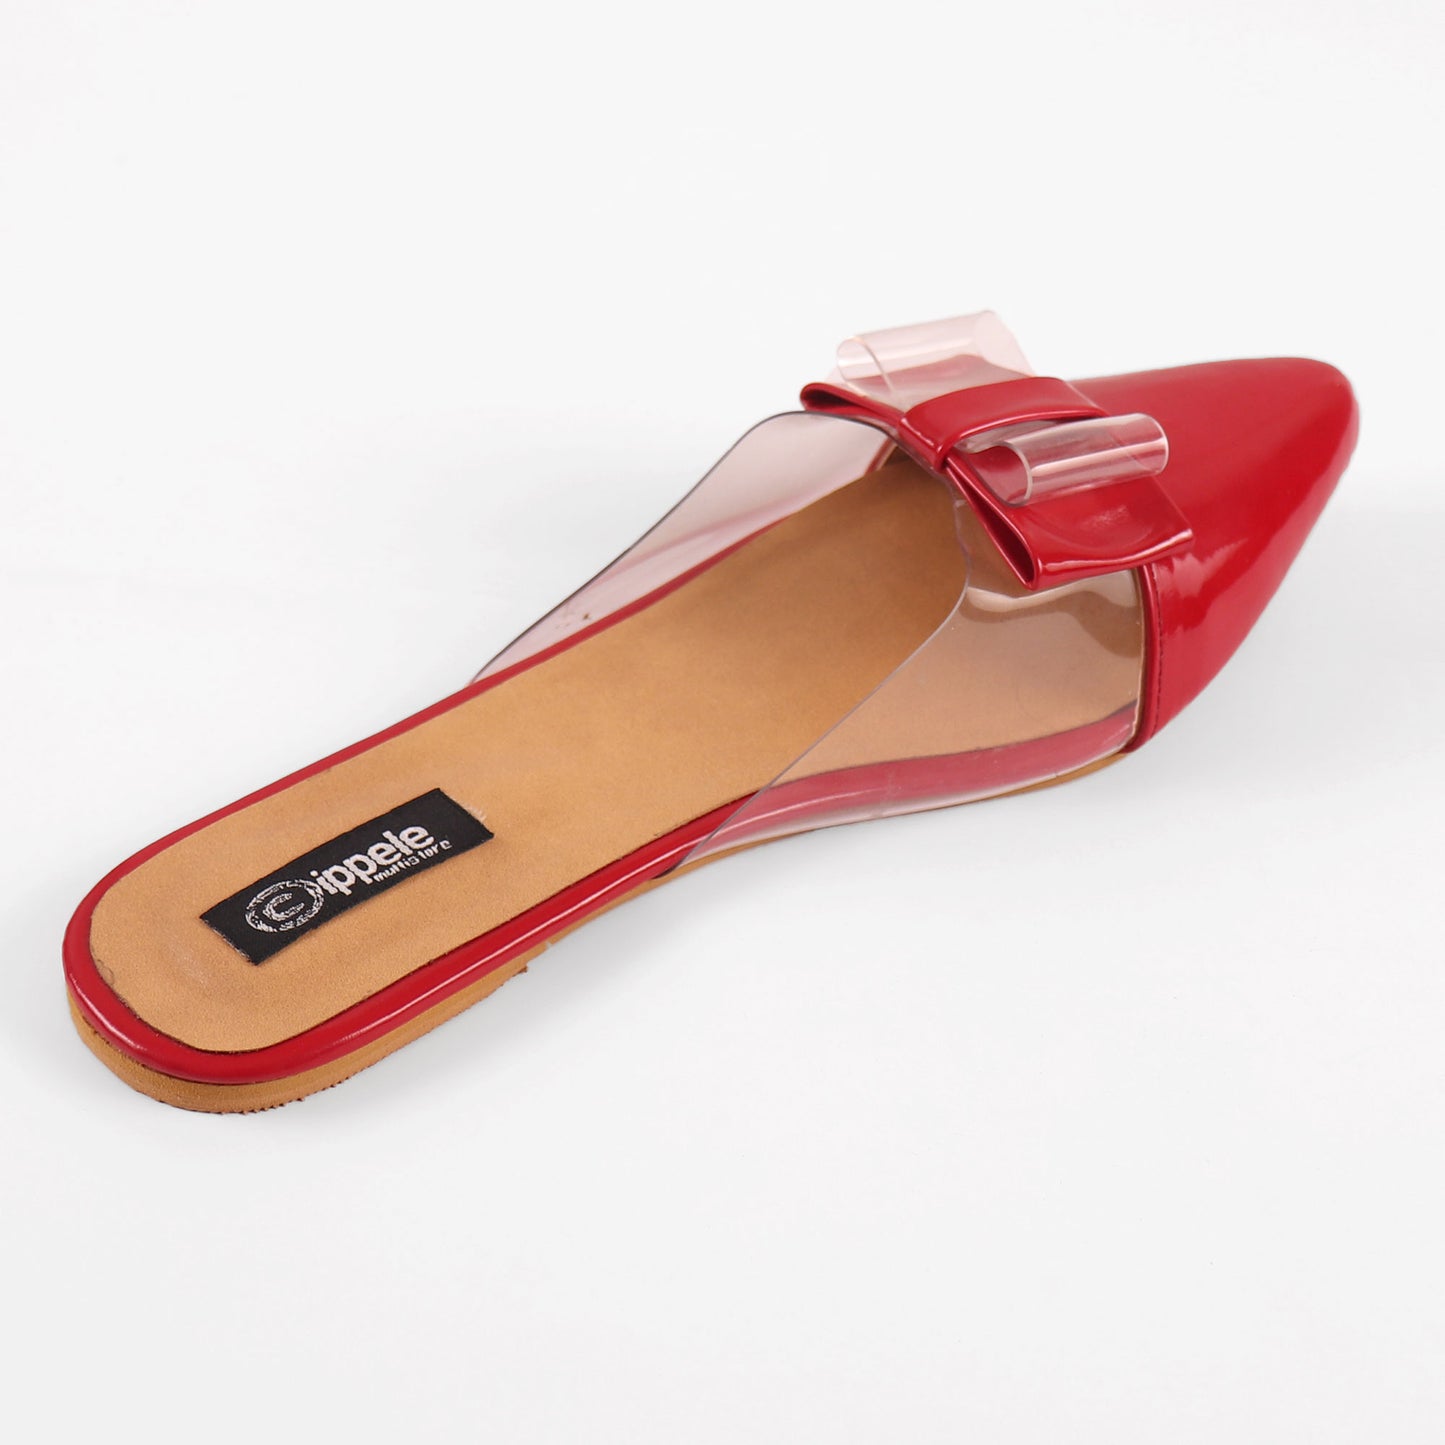 Foot Wear,The Finska Cookie Ribbon Mules in Red - Cippele Multi Store